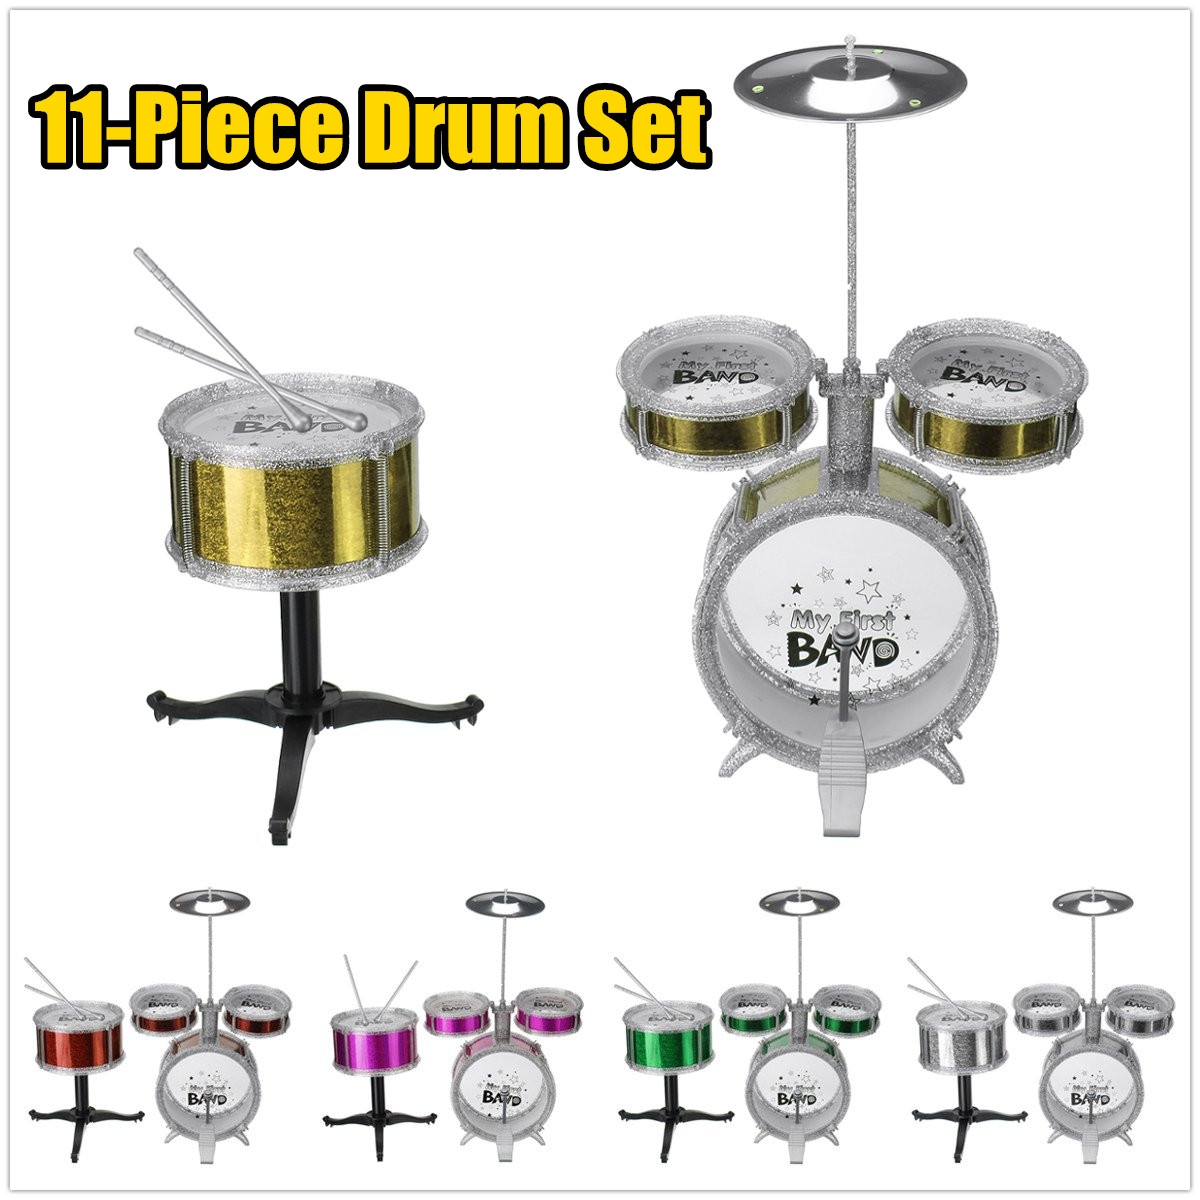 11-Piece Jazz Drum Set Electroplating Beat Drums Children's Educational Musical Toys